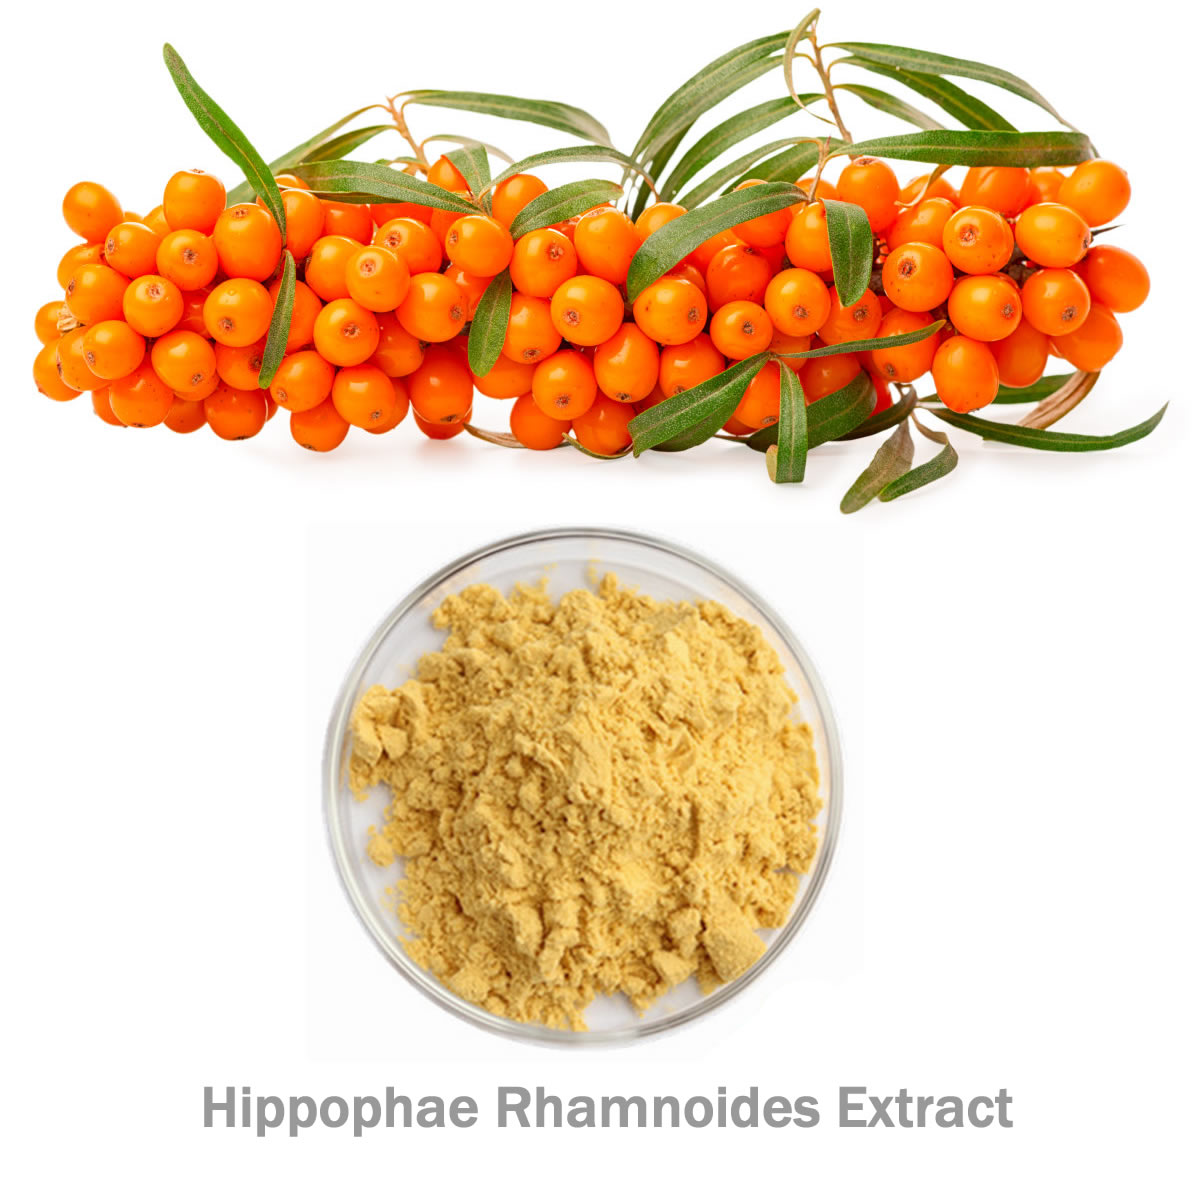 Hippophae Rhamnoides Extract